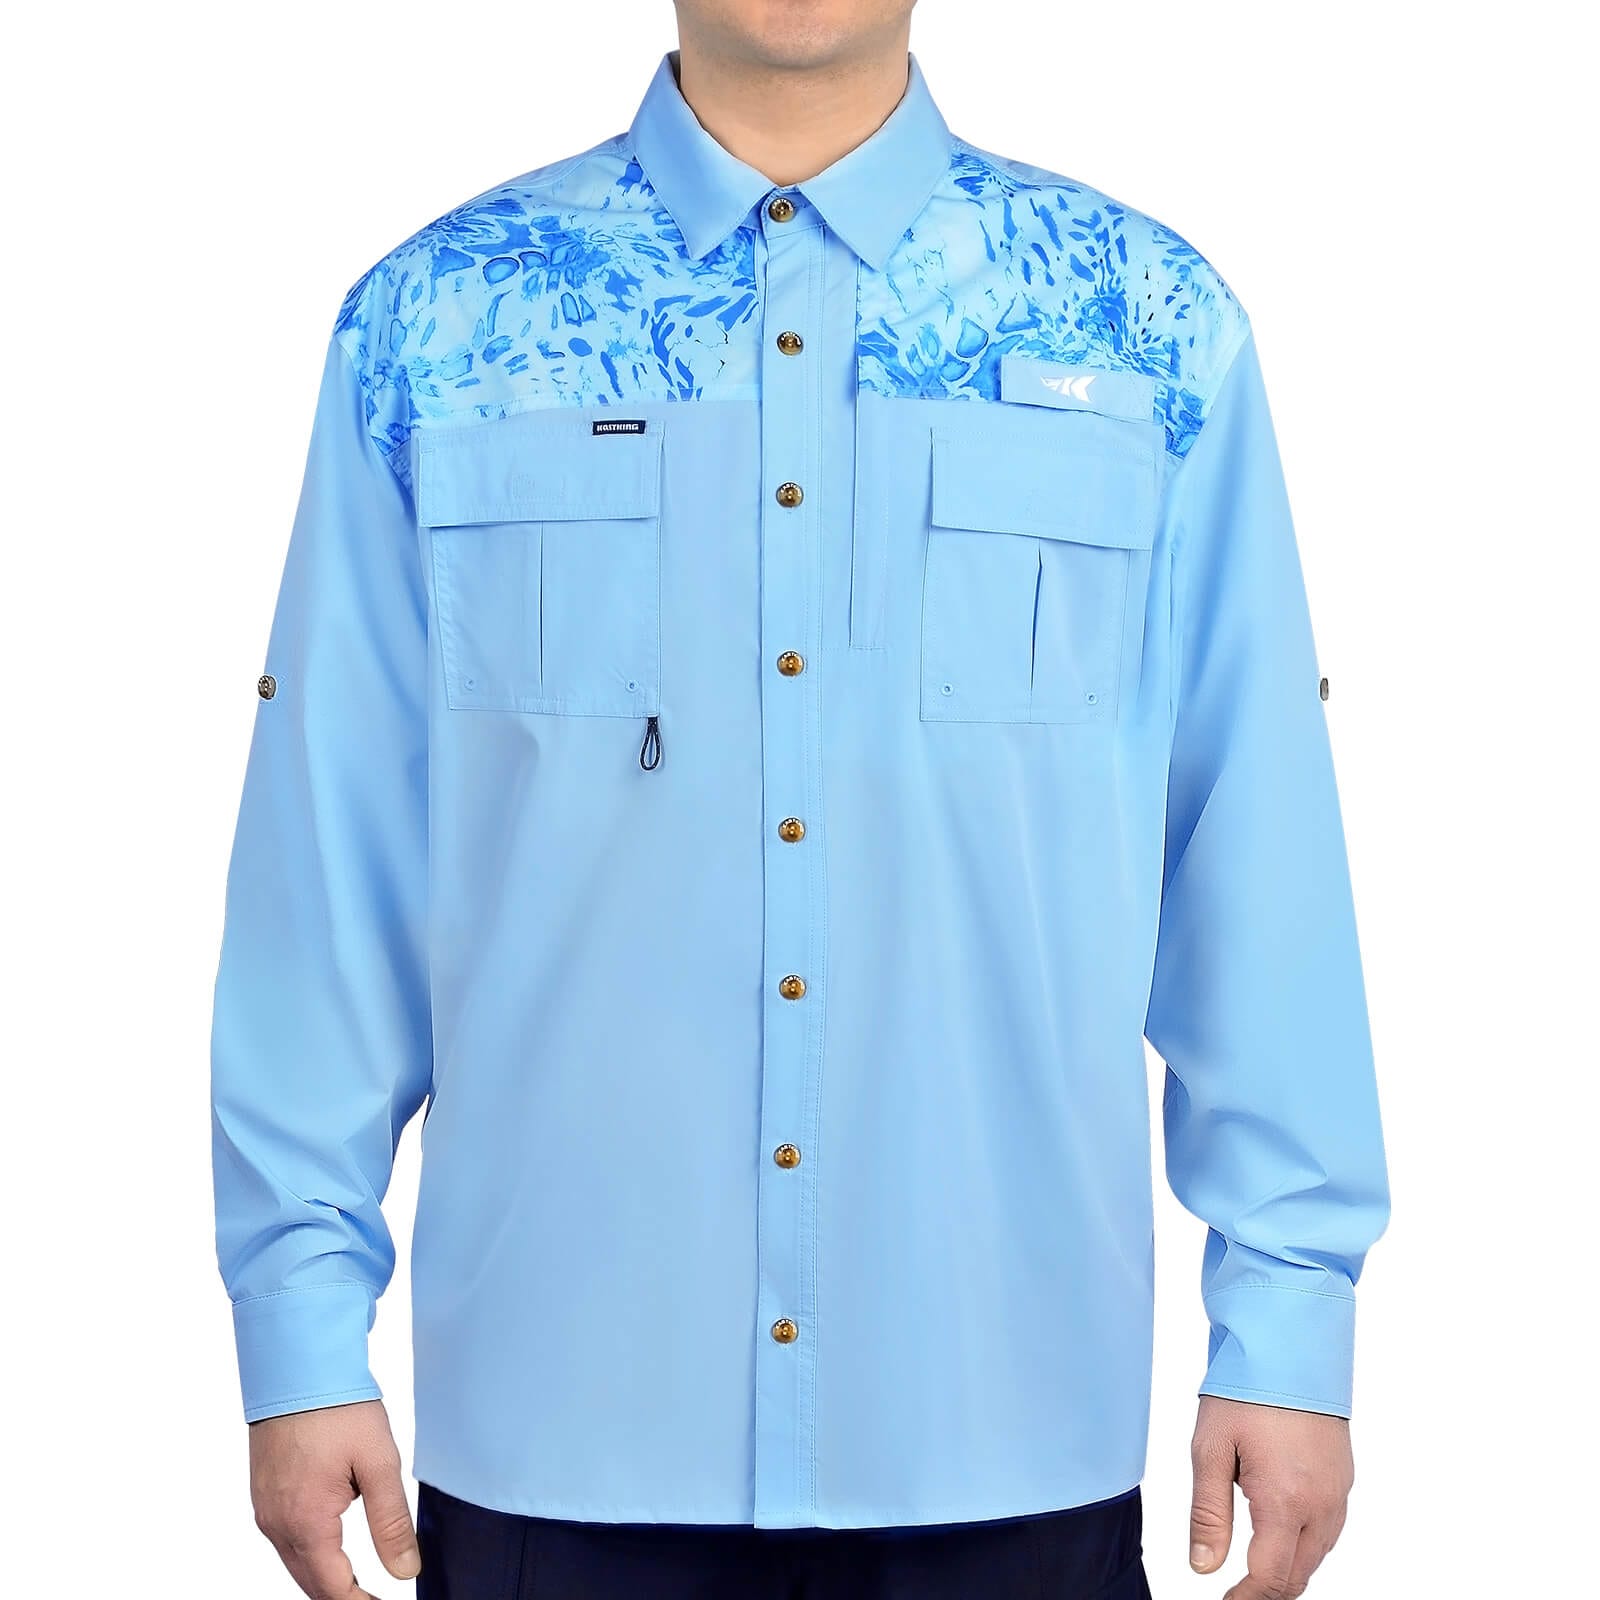 KastKing ReKon Men's Fishing Shirts - Prym 1:seafoam / Blue / Small